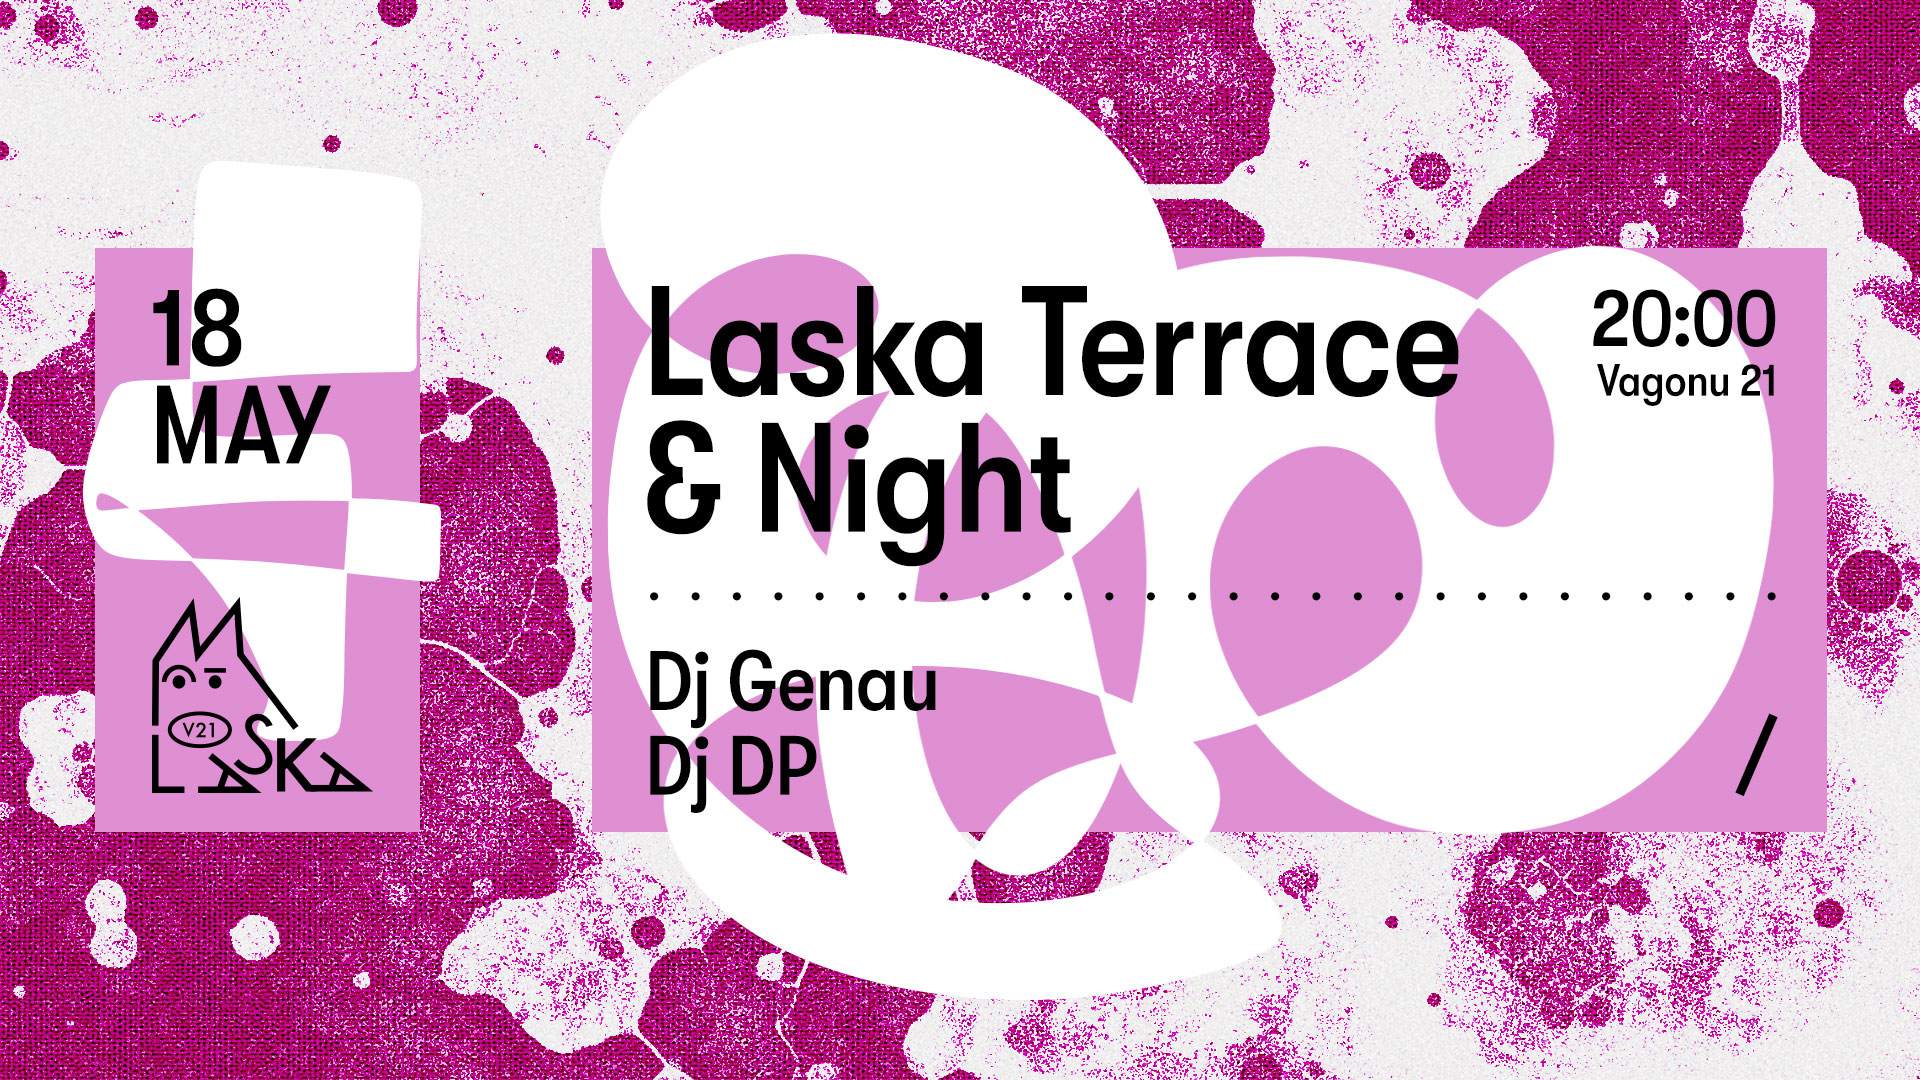 Laska Terrace & Night - Dj Genau / Dj DP - フライヤー表